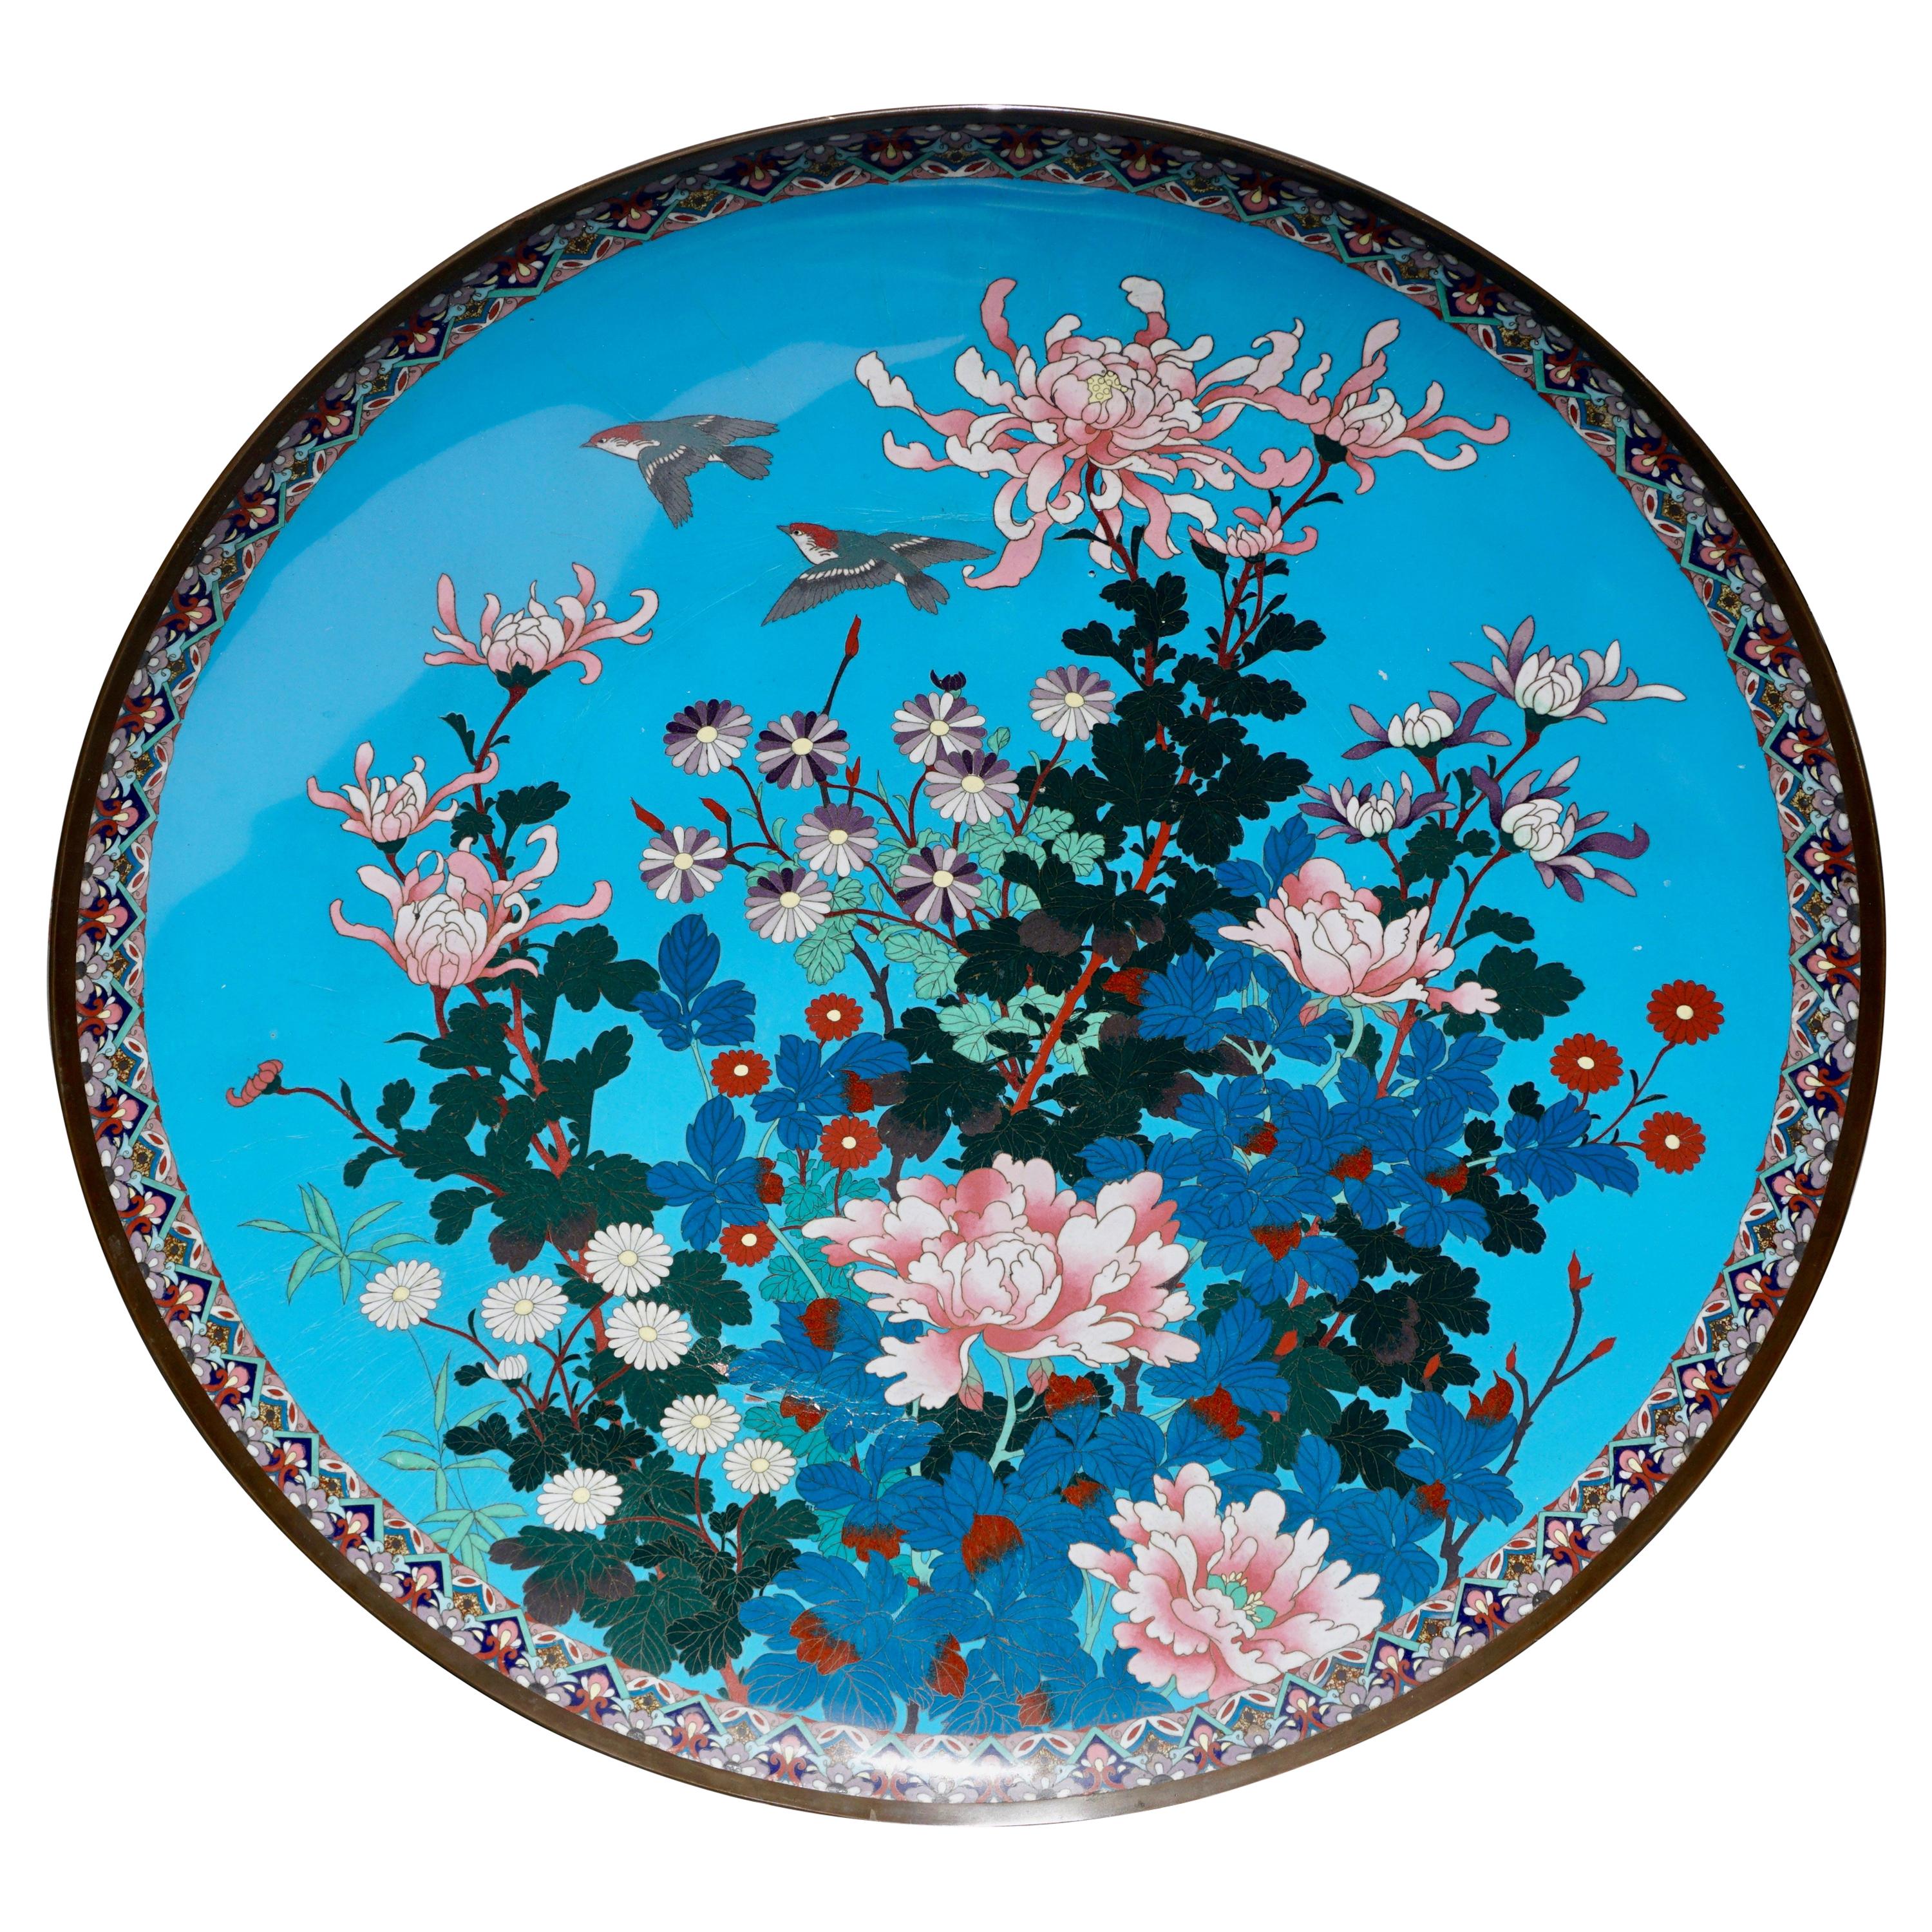 Quality Antique Japanese Cloisonn�é Plate or Wall Art Decoration